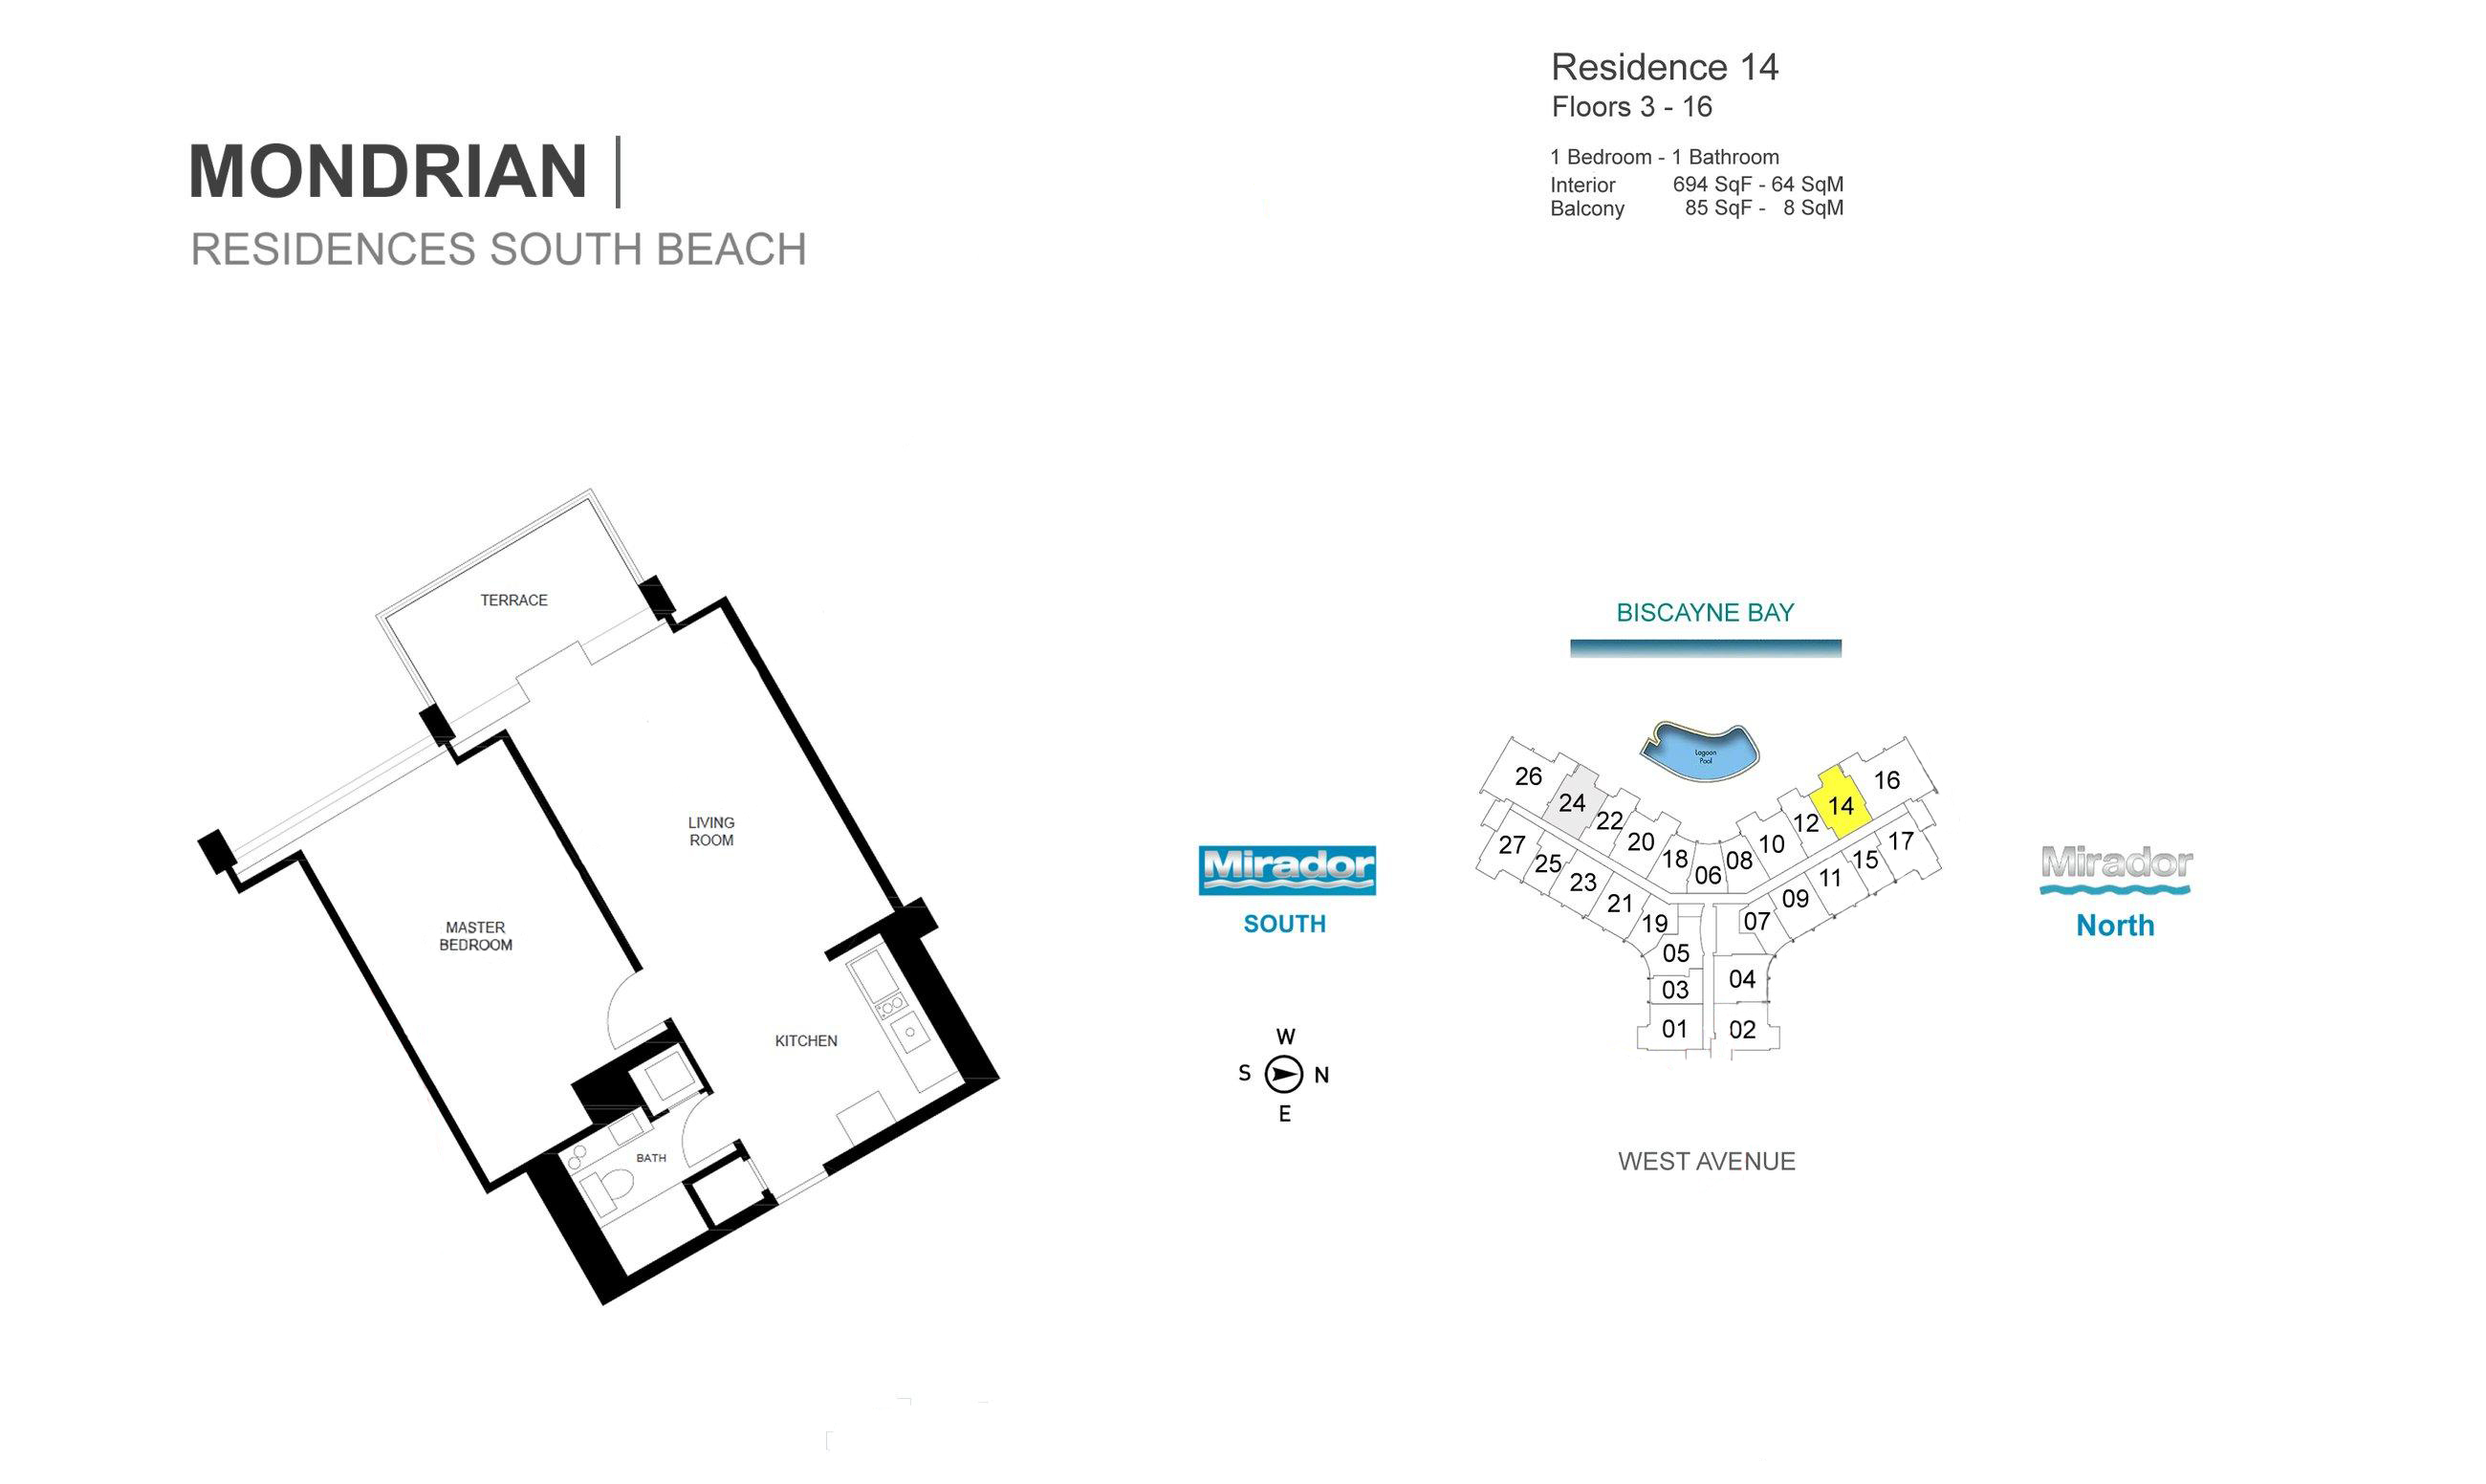 Mondrian South Beach Residence 14